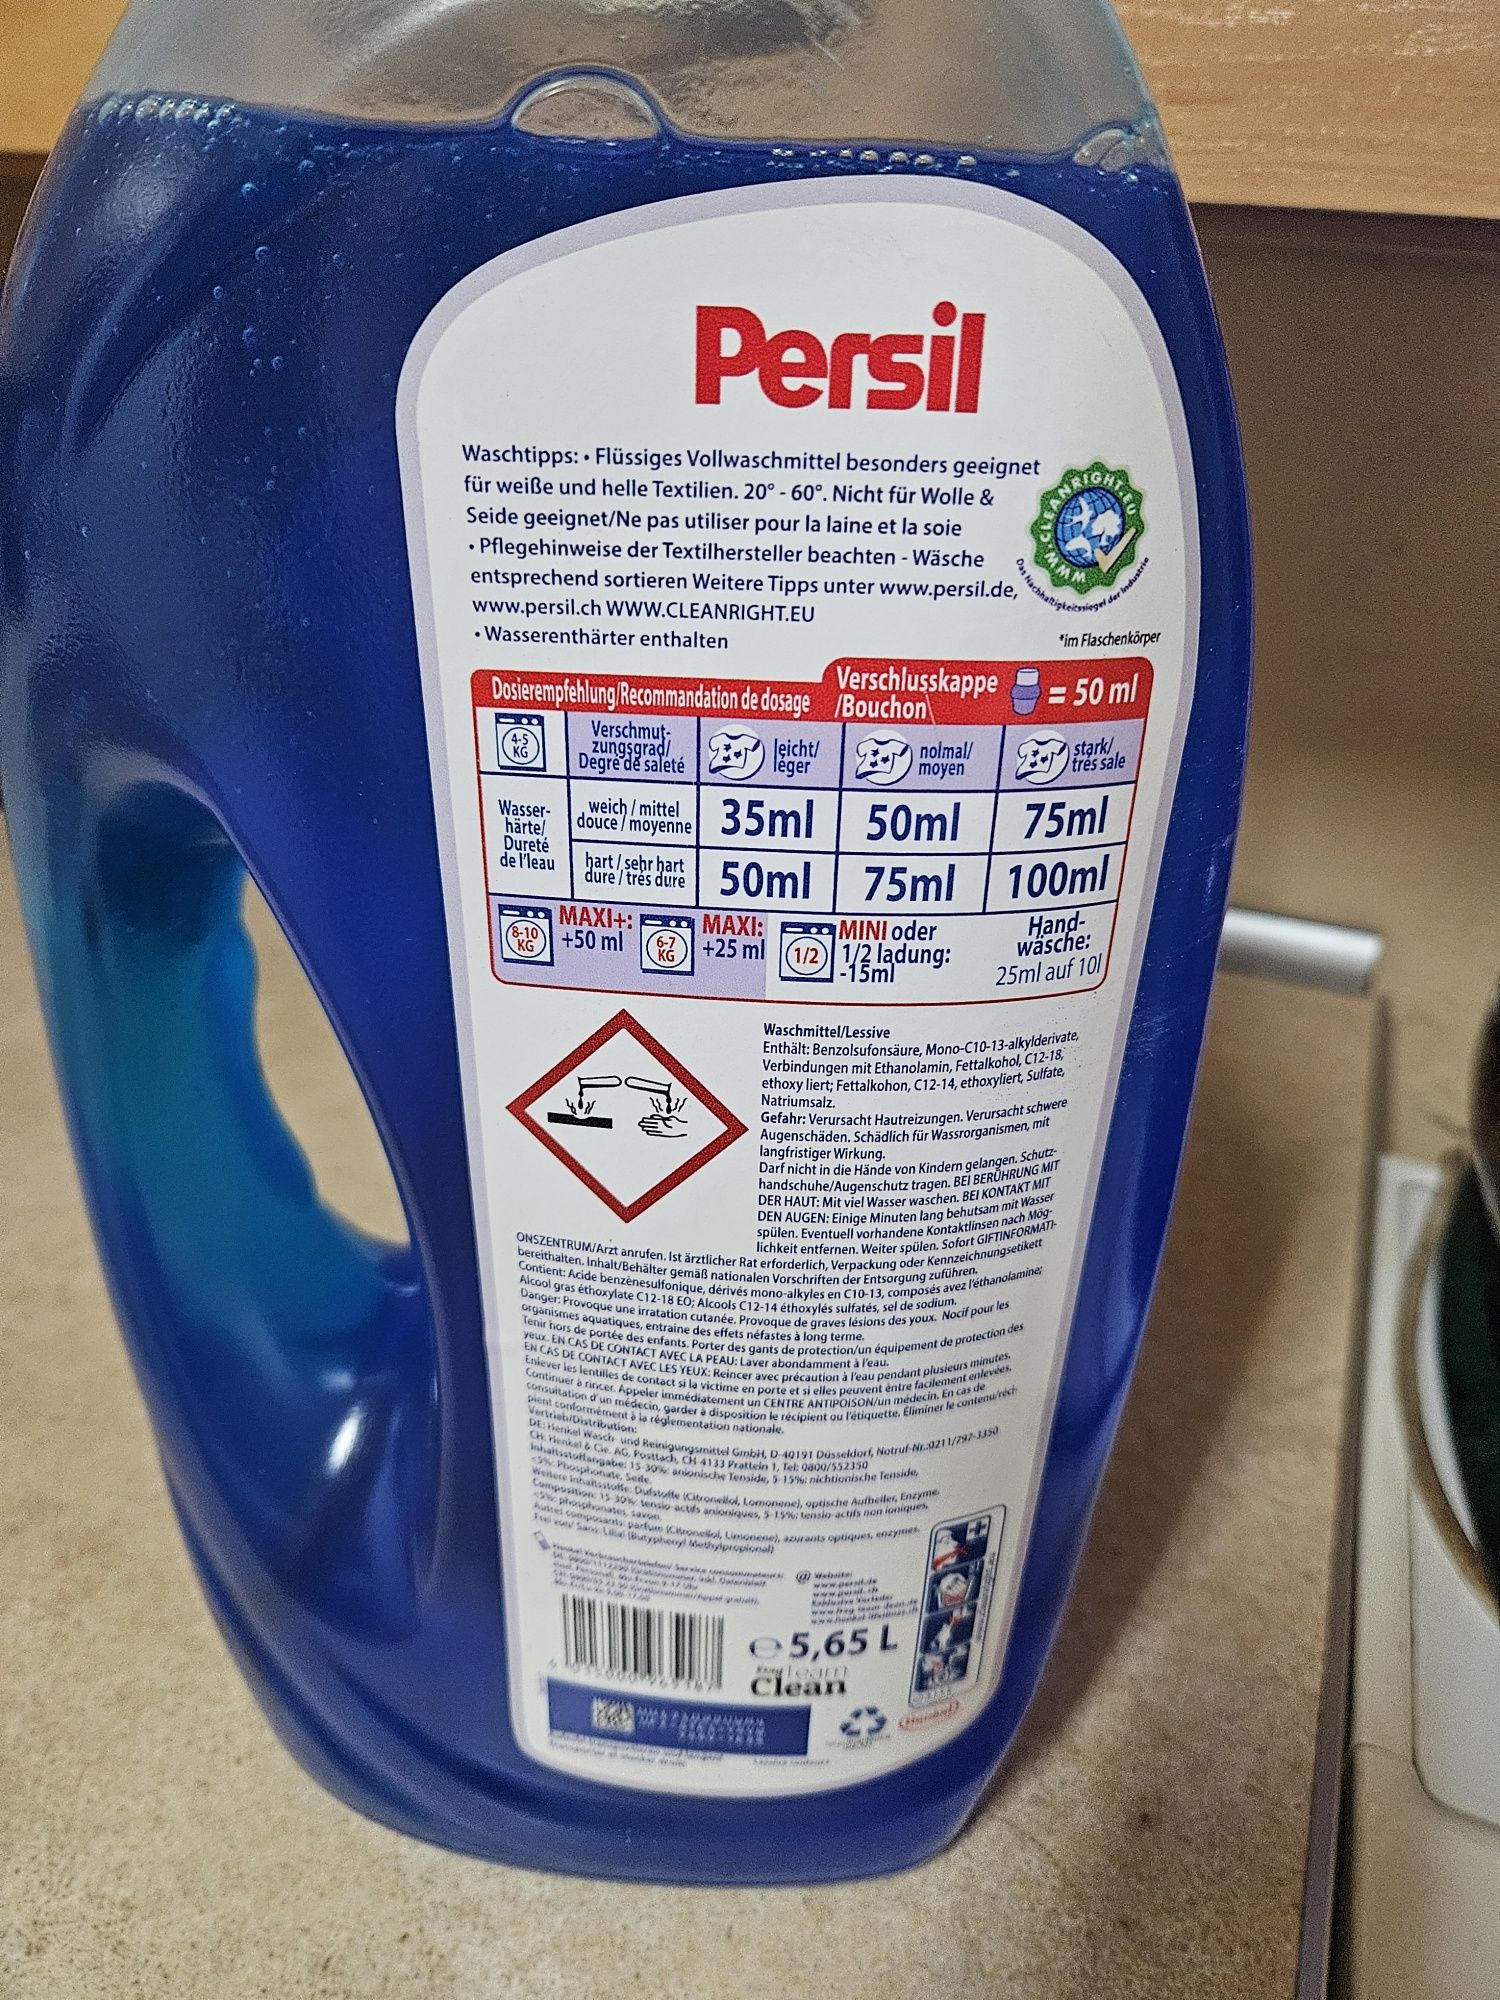 Żel do prania Persil 5.65l 113 prań.